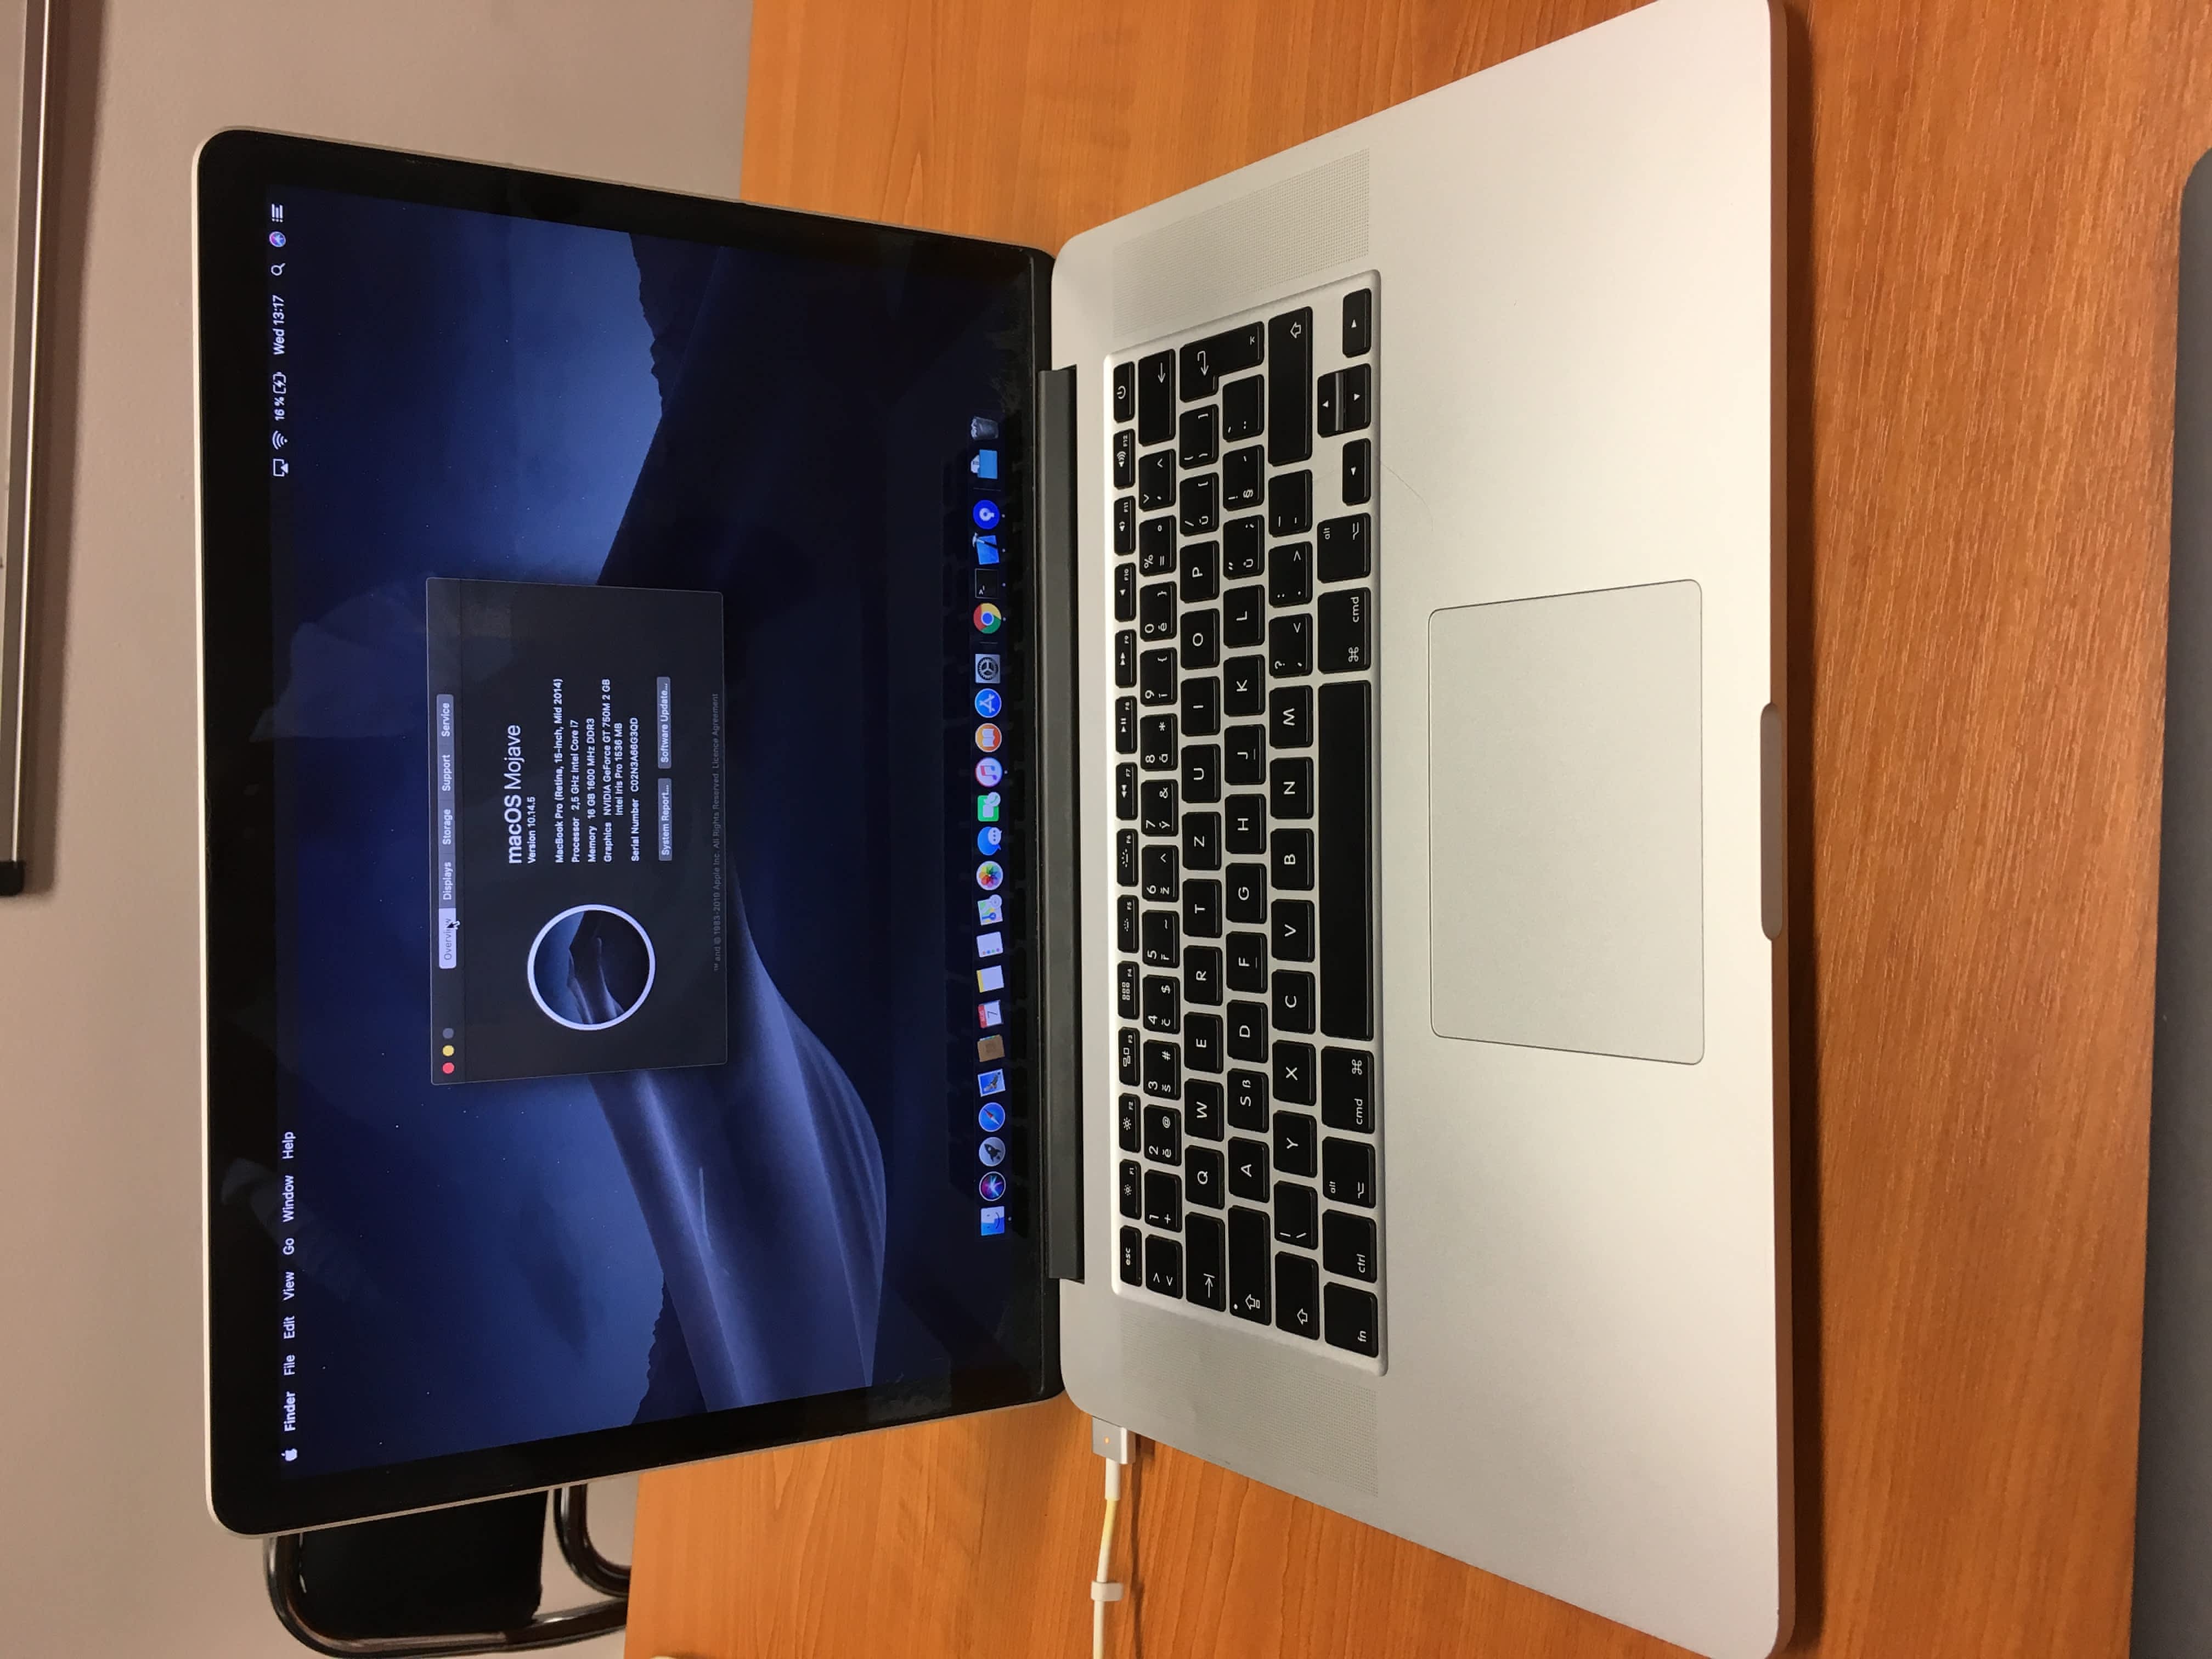 macbook pro mid 2017 15 inch